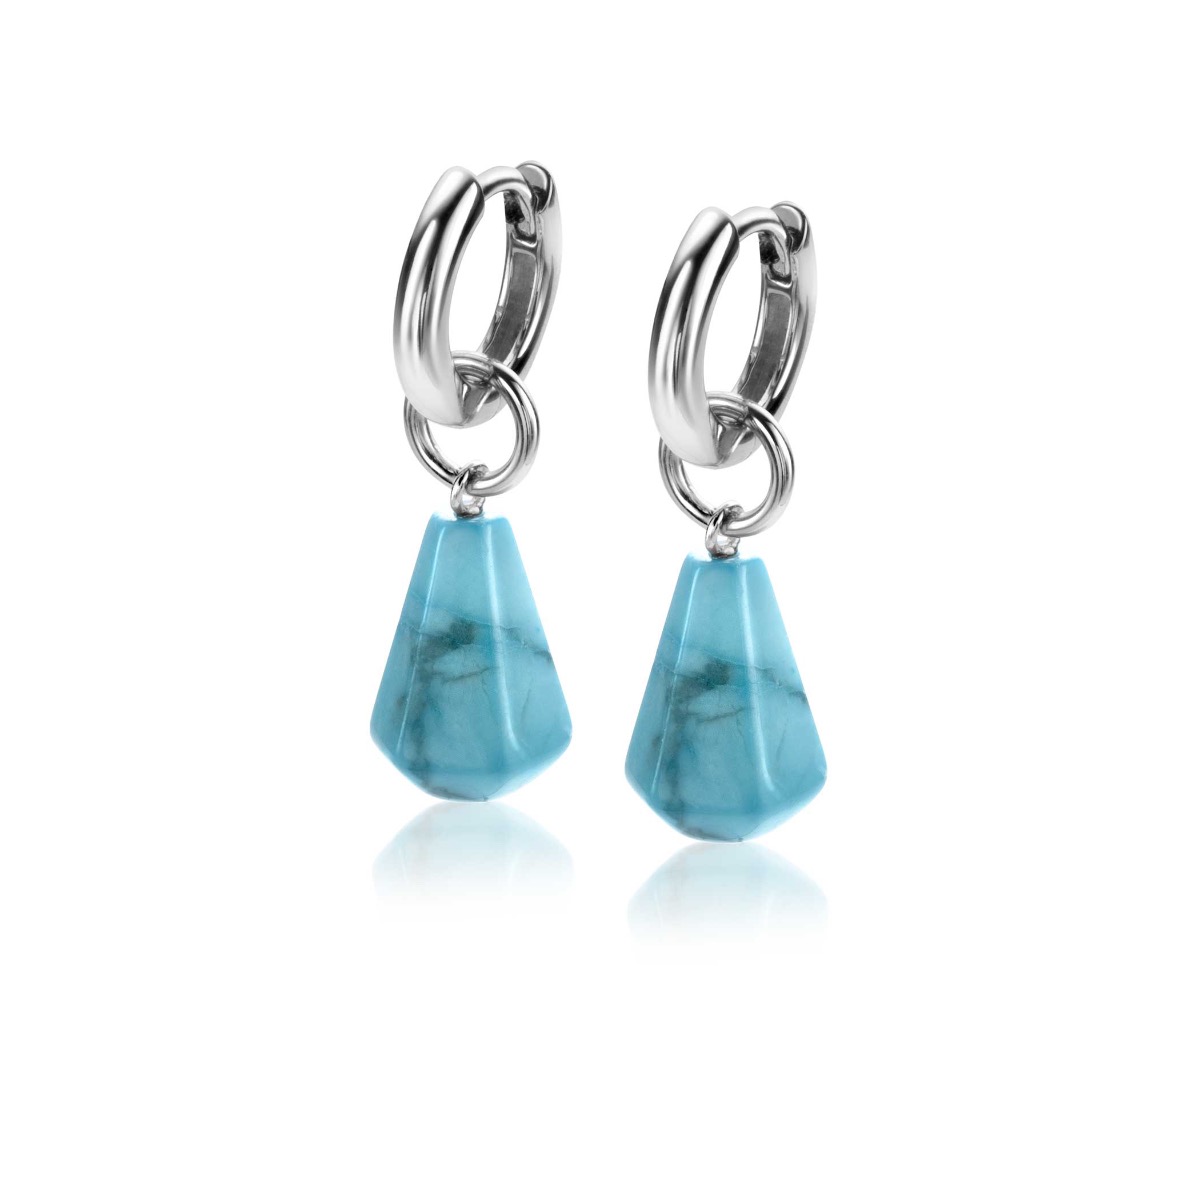 19mm ZINZI Sterling Silver Earrings Pendants Cone in Turquoise Howlite ZICH2256T (excl. hoop earrings)